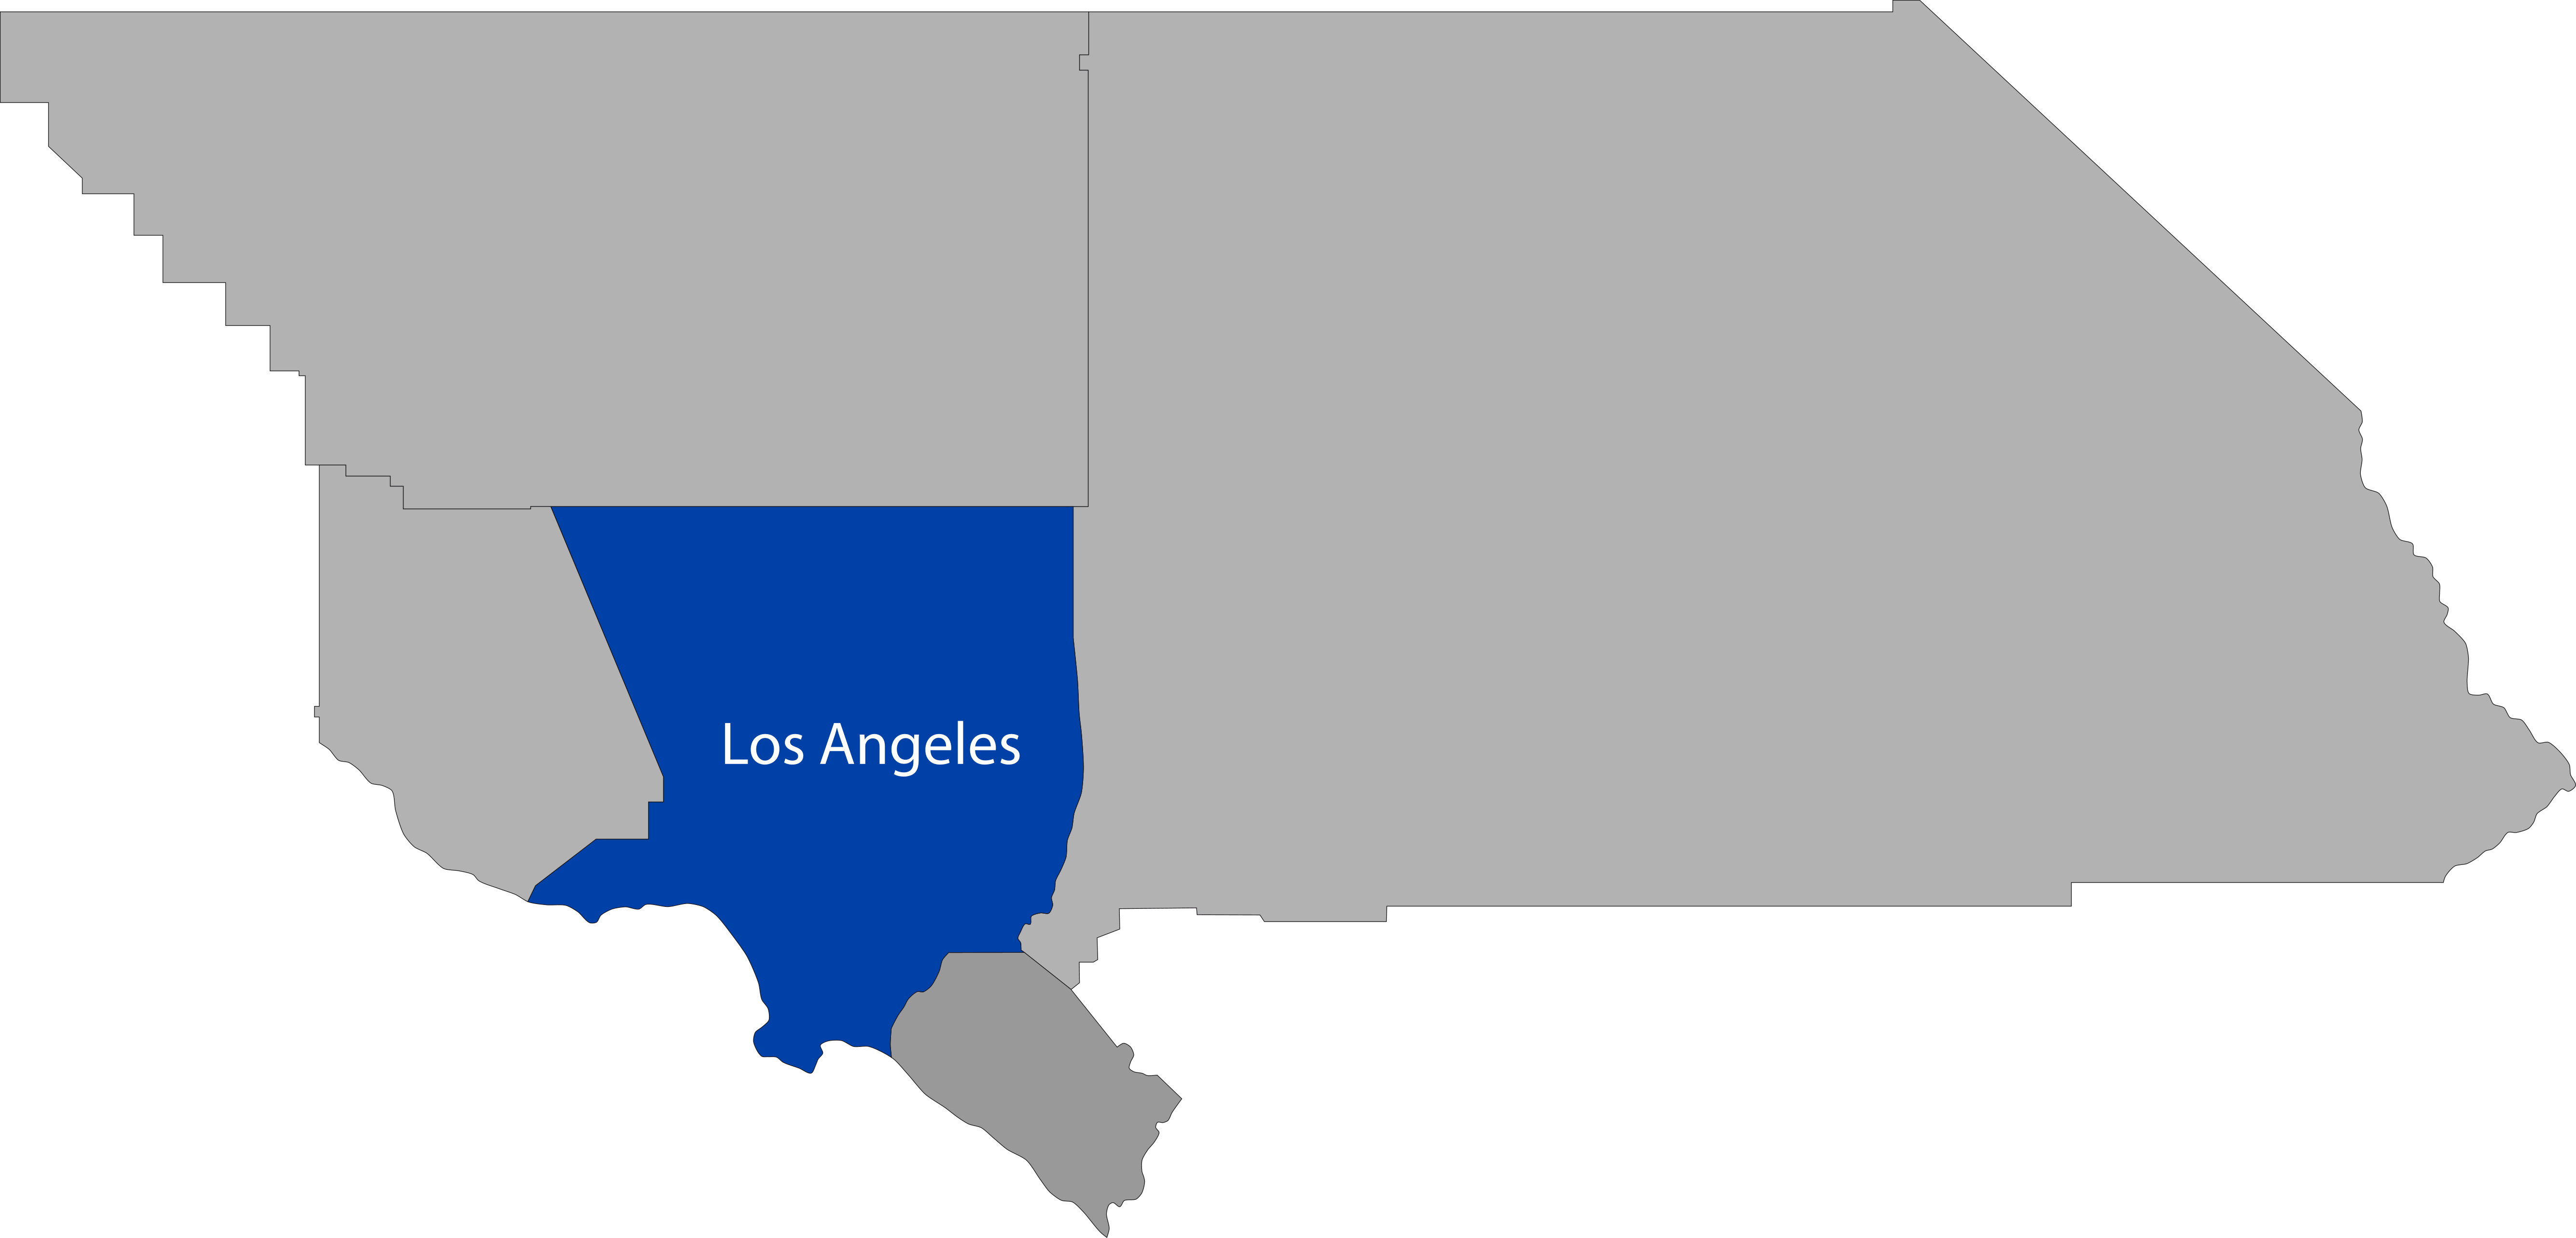 state of california